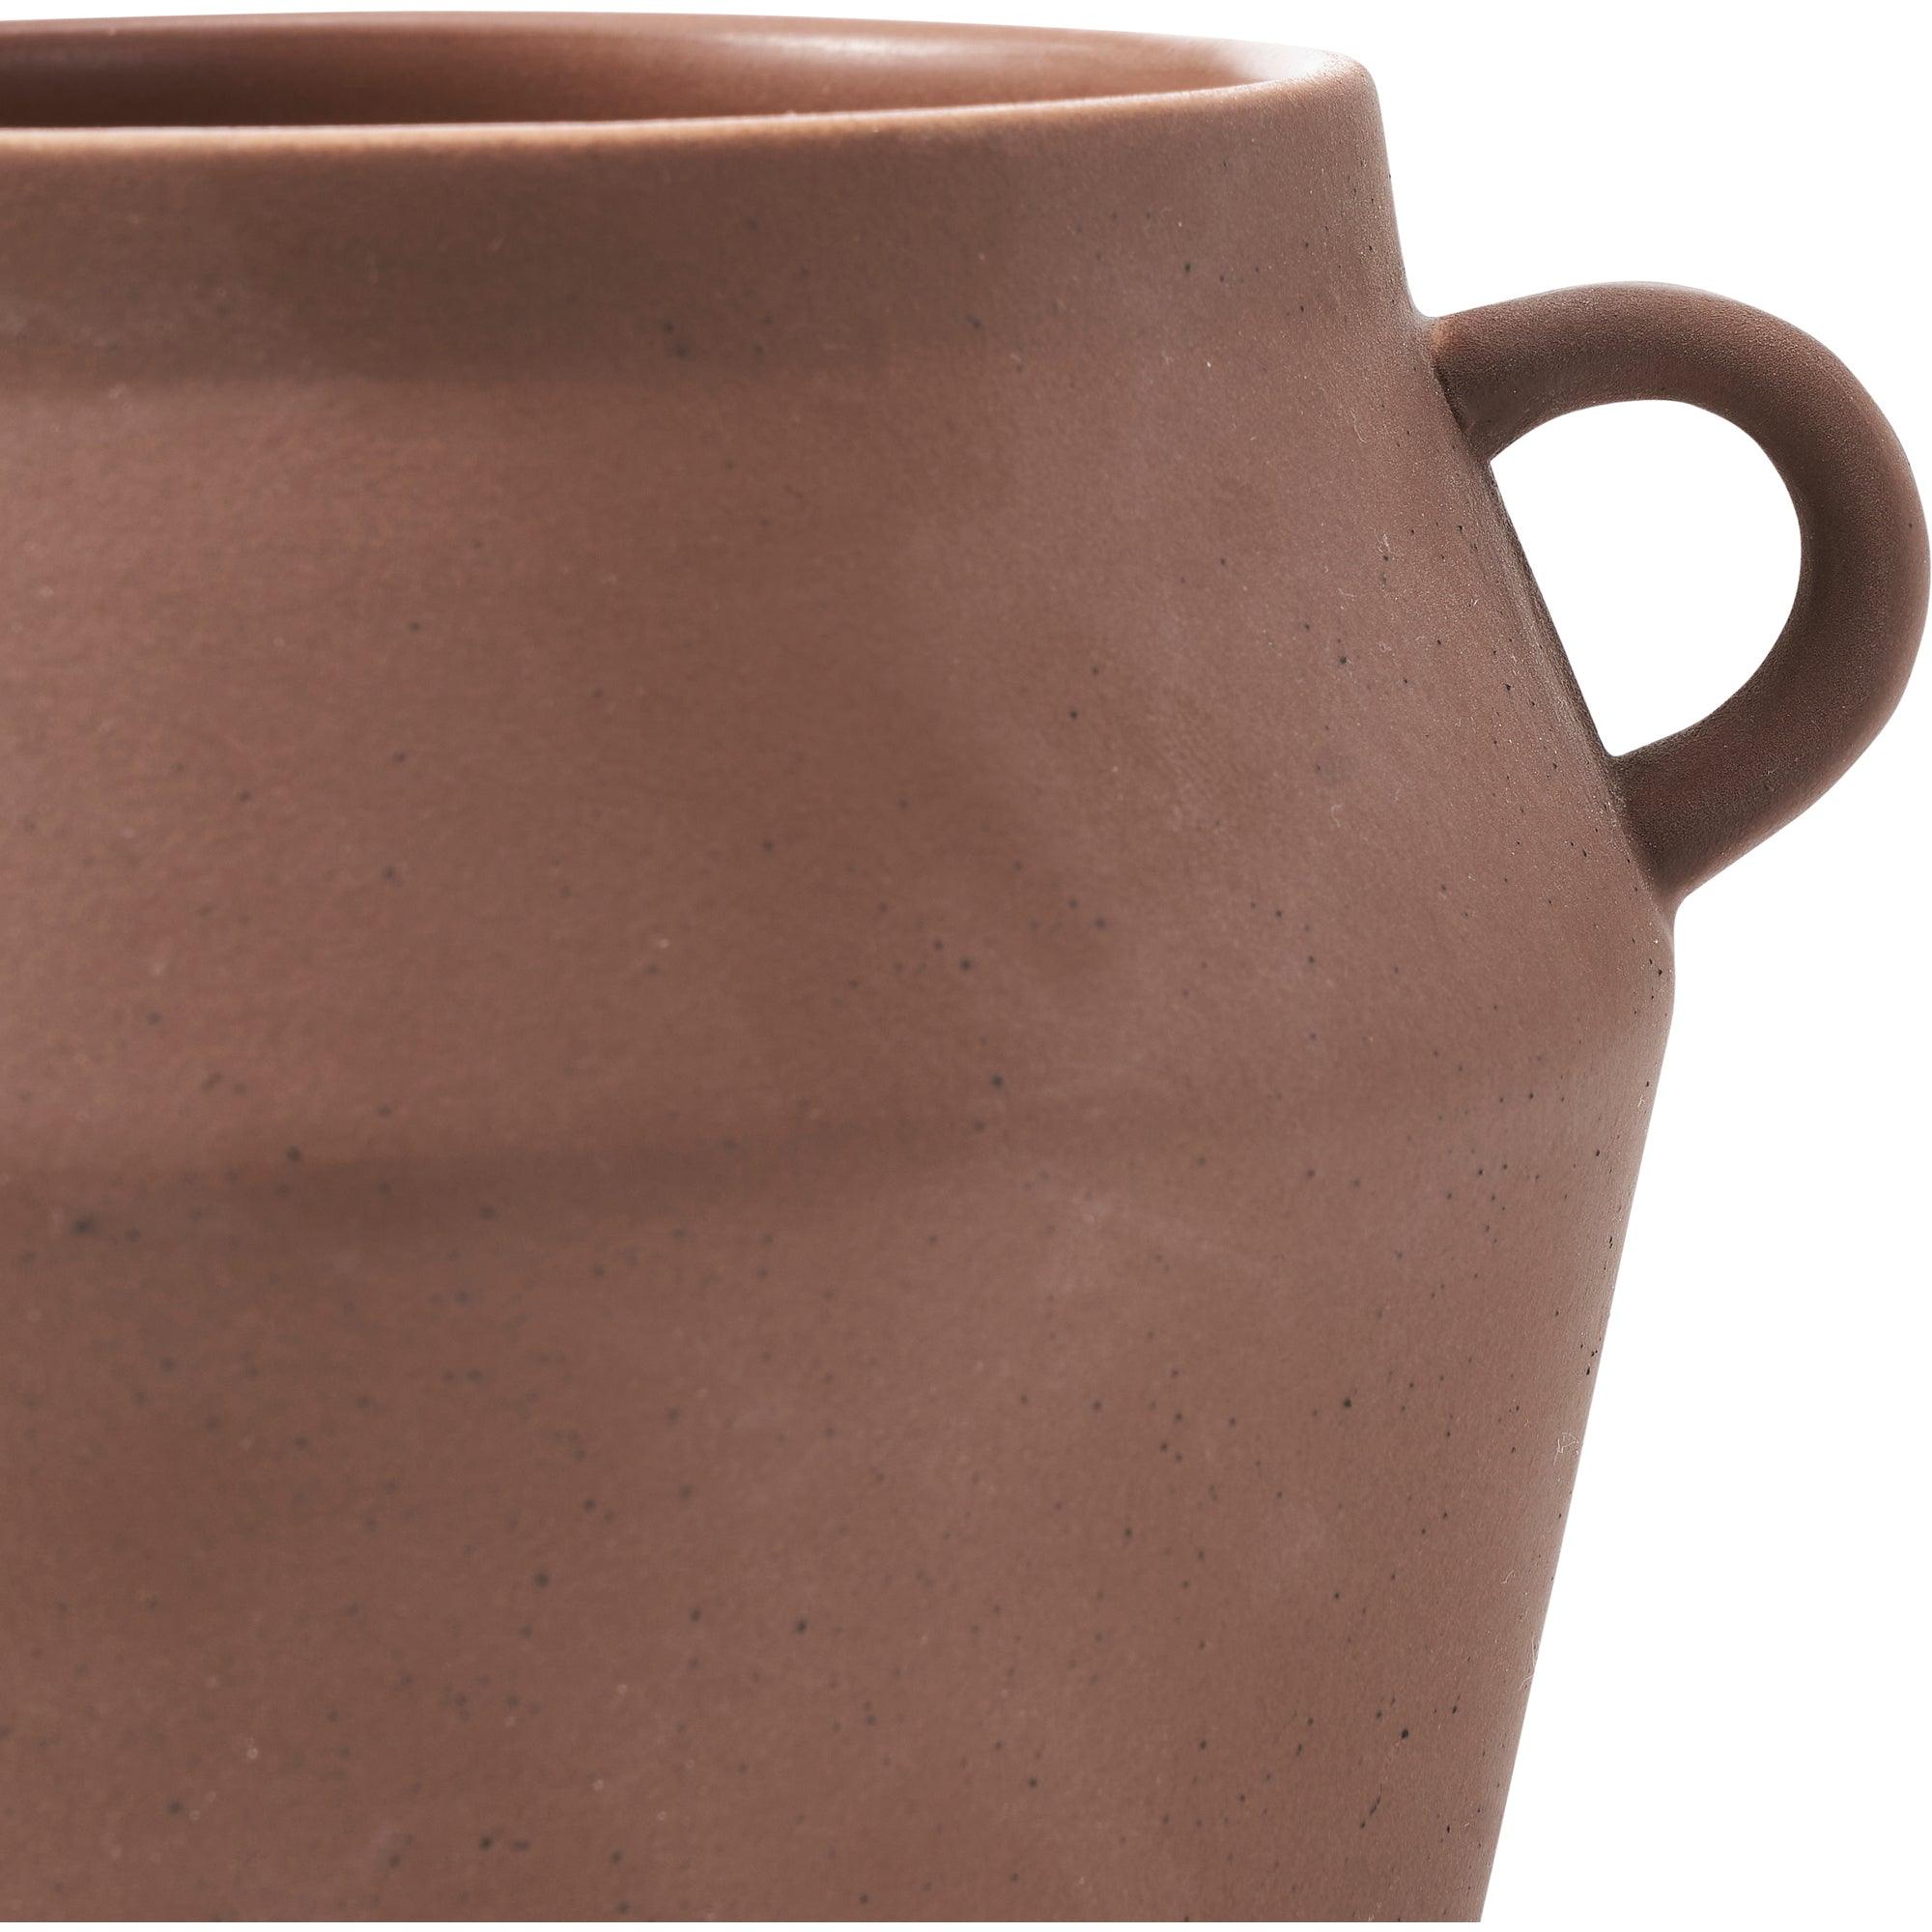 Ravello Brown Stoneware Vase - Reimagine Designs - Accessories, Decor, new, vase, Vases